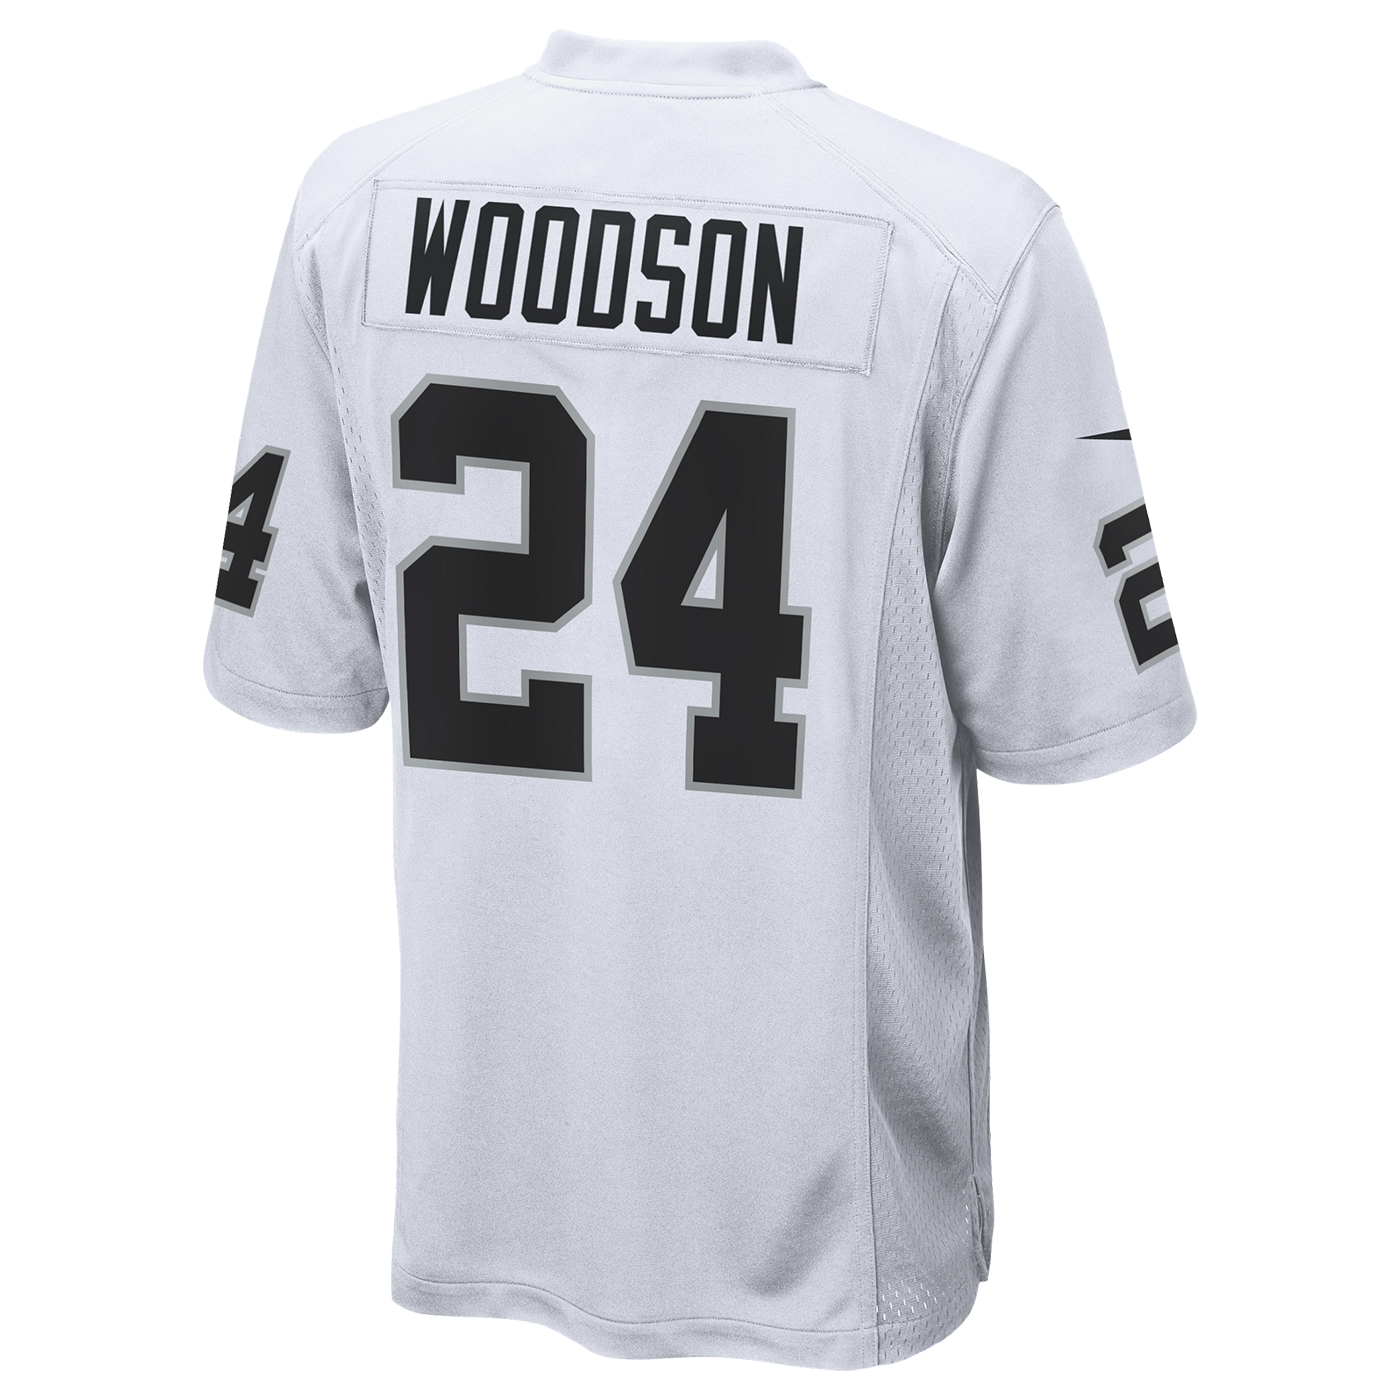 woodson 24 jersey